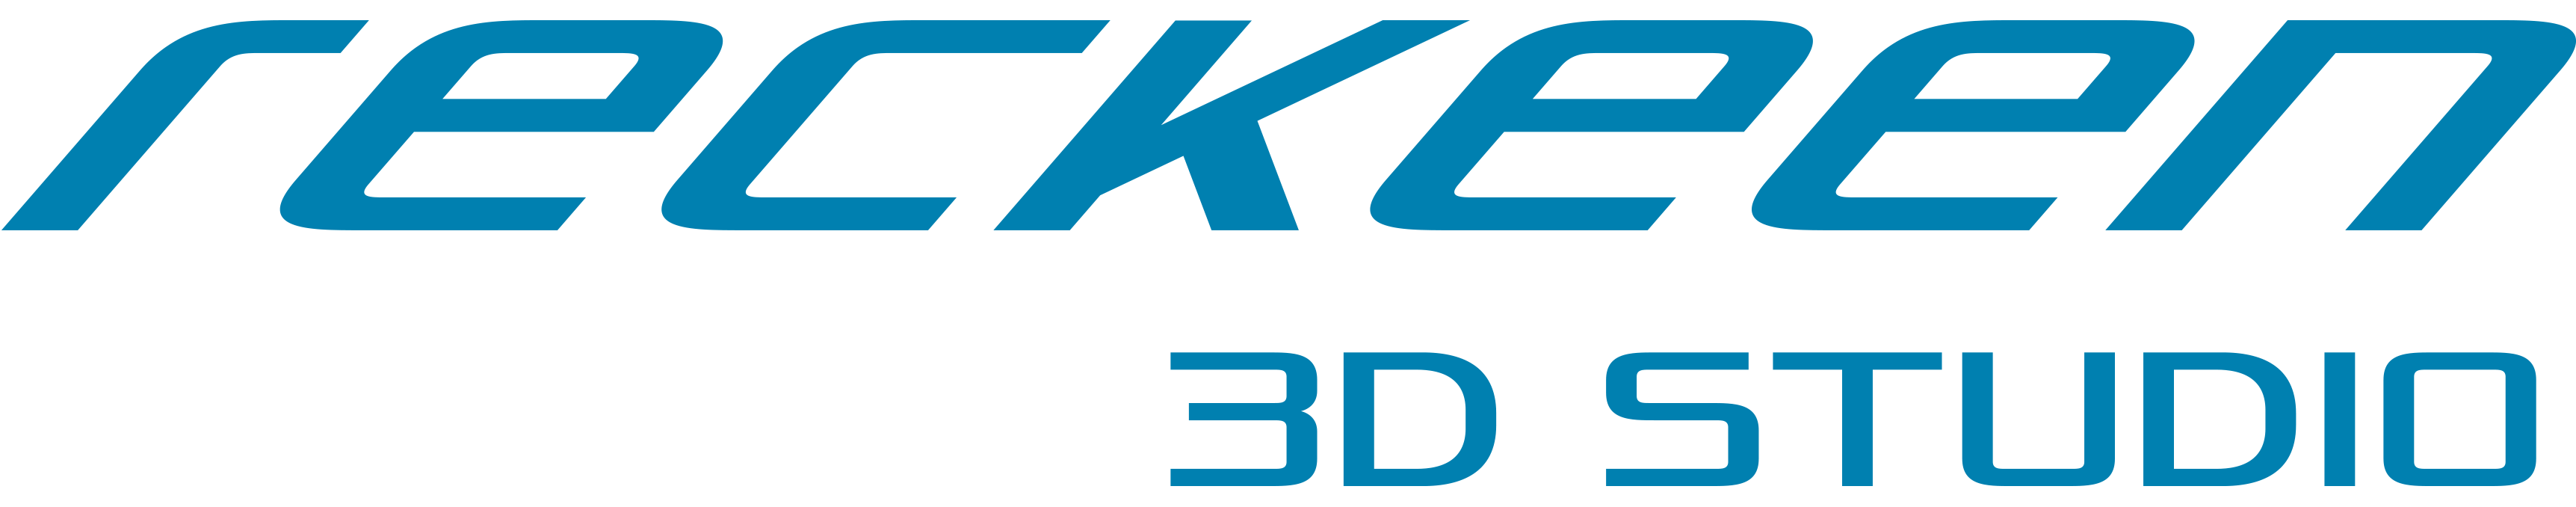 reckken_main_logo